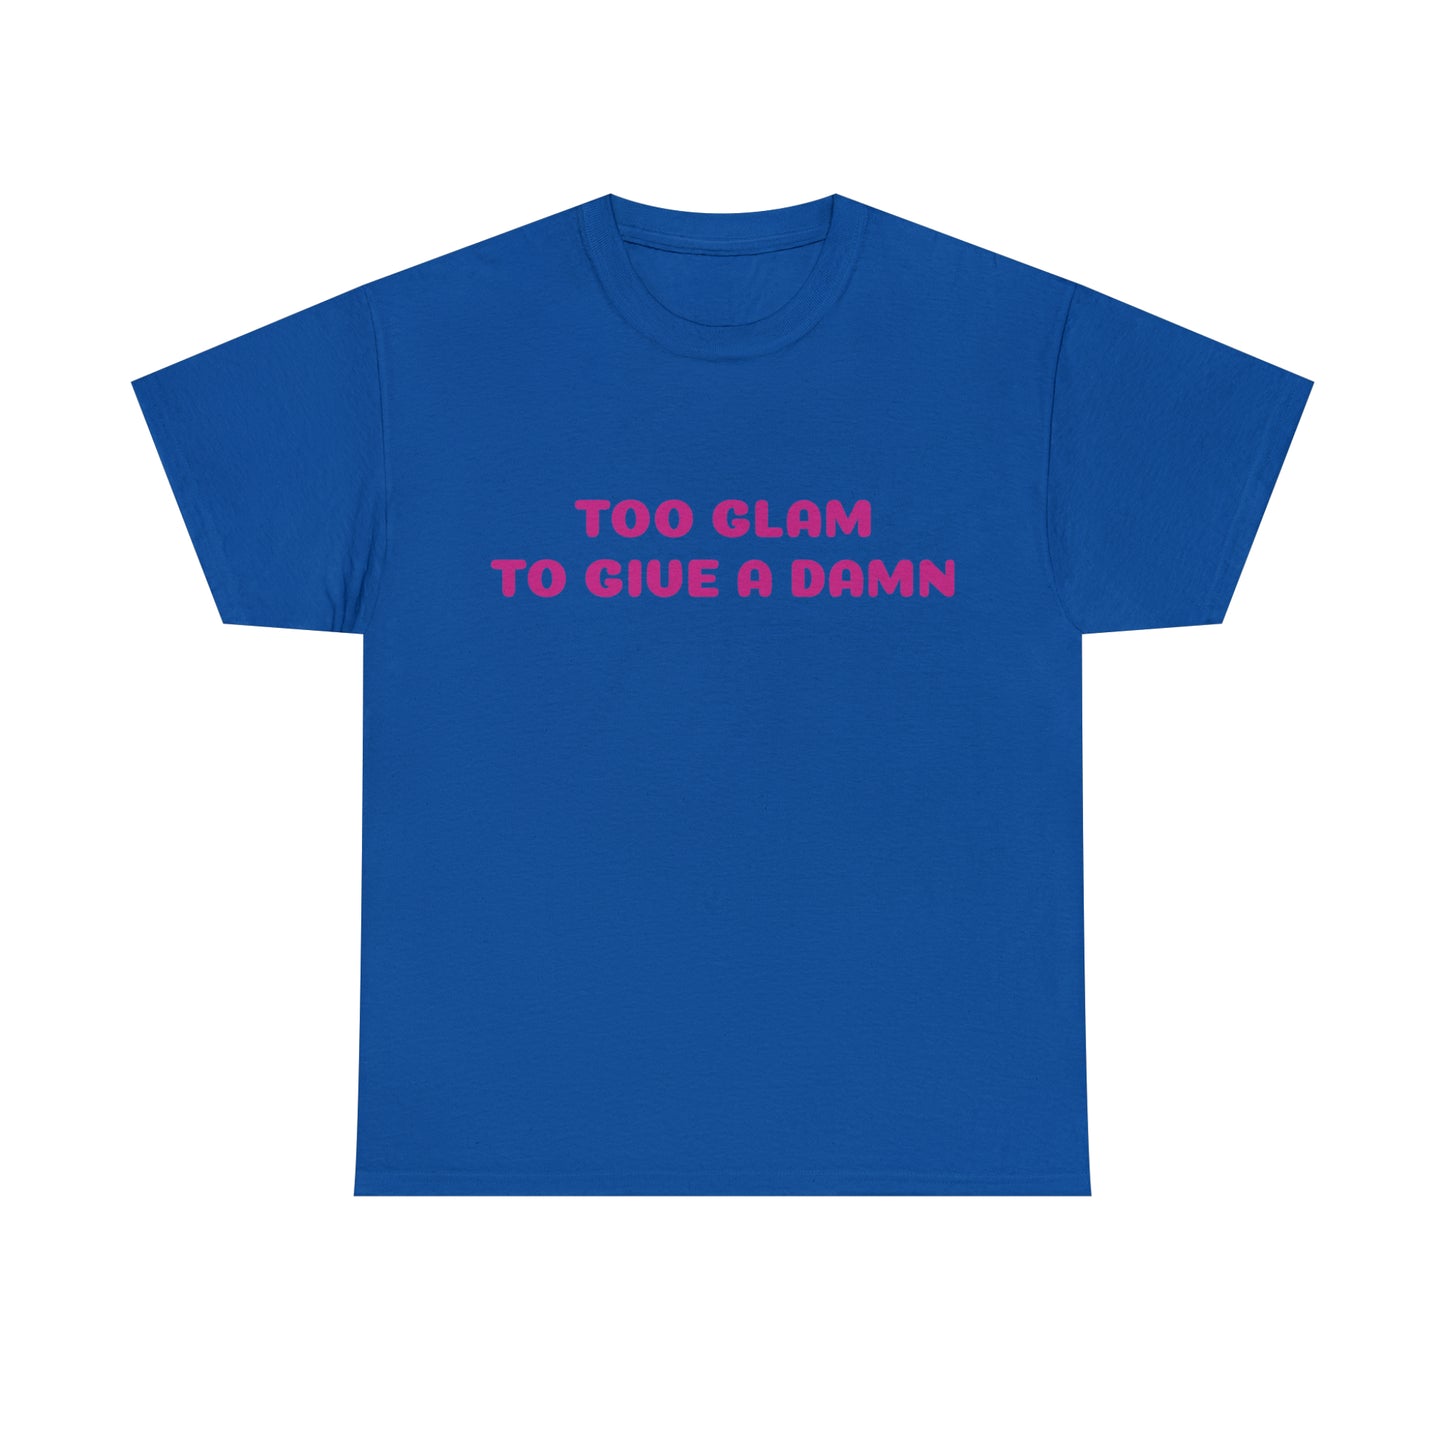 Custom Parody T-shirt, Too glam to give a damn shirt design